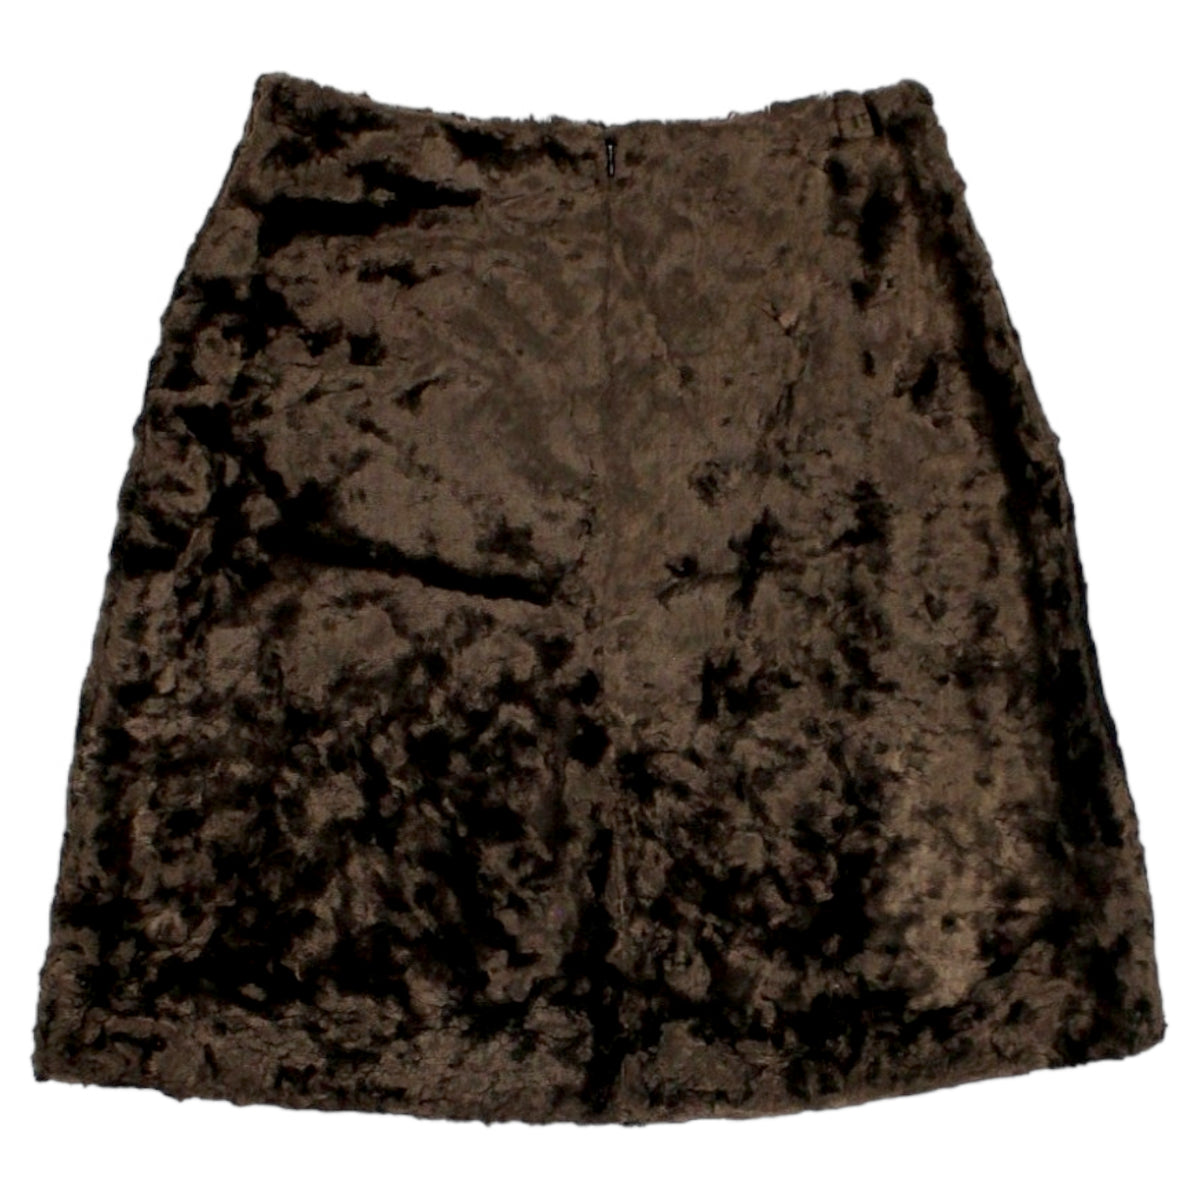 Orla Kiely Chocolate Furry Skirt